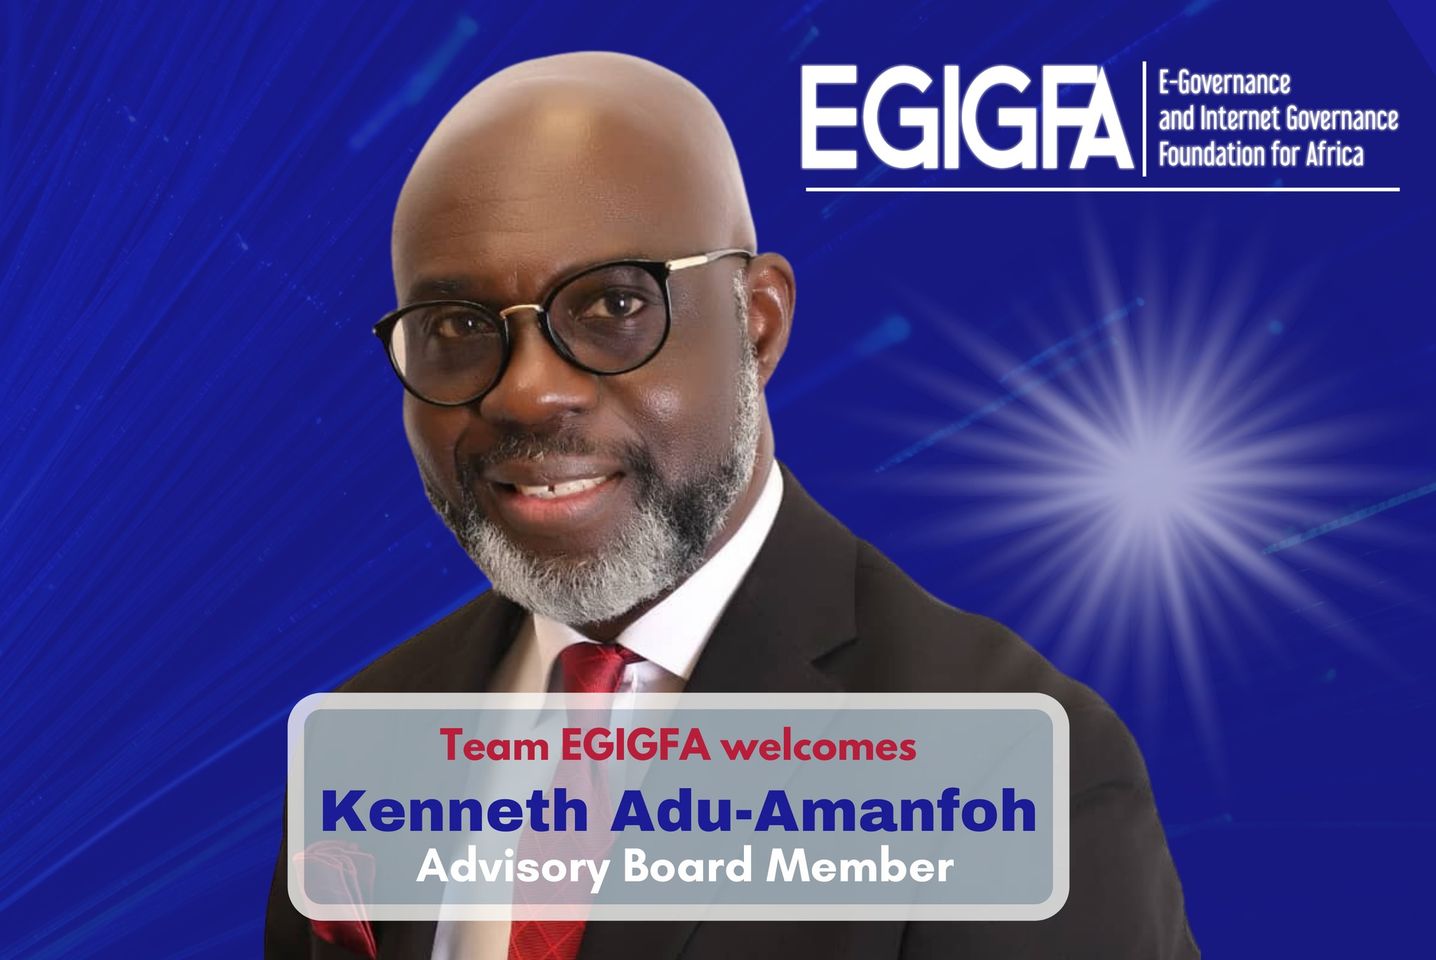 Kenneth Adu-Amanfoh joins the EGIGFA Advisory Board.